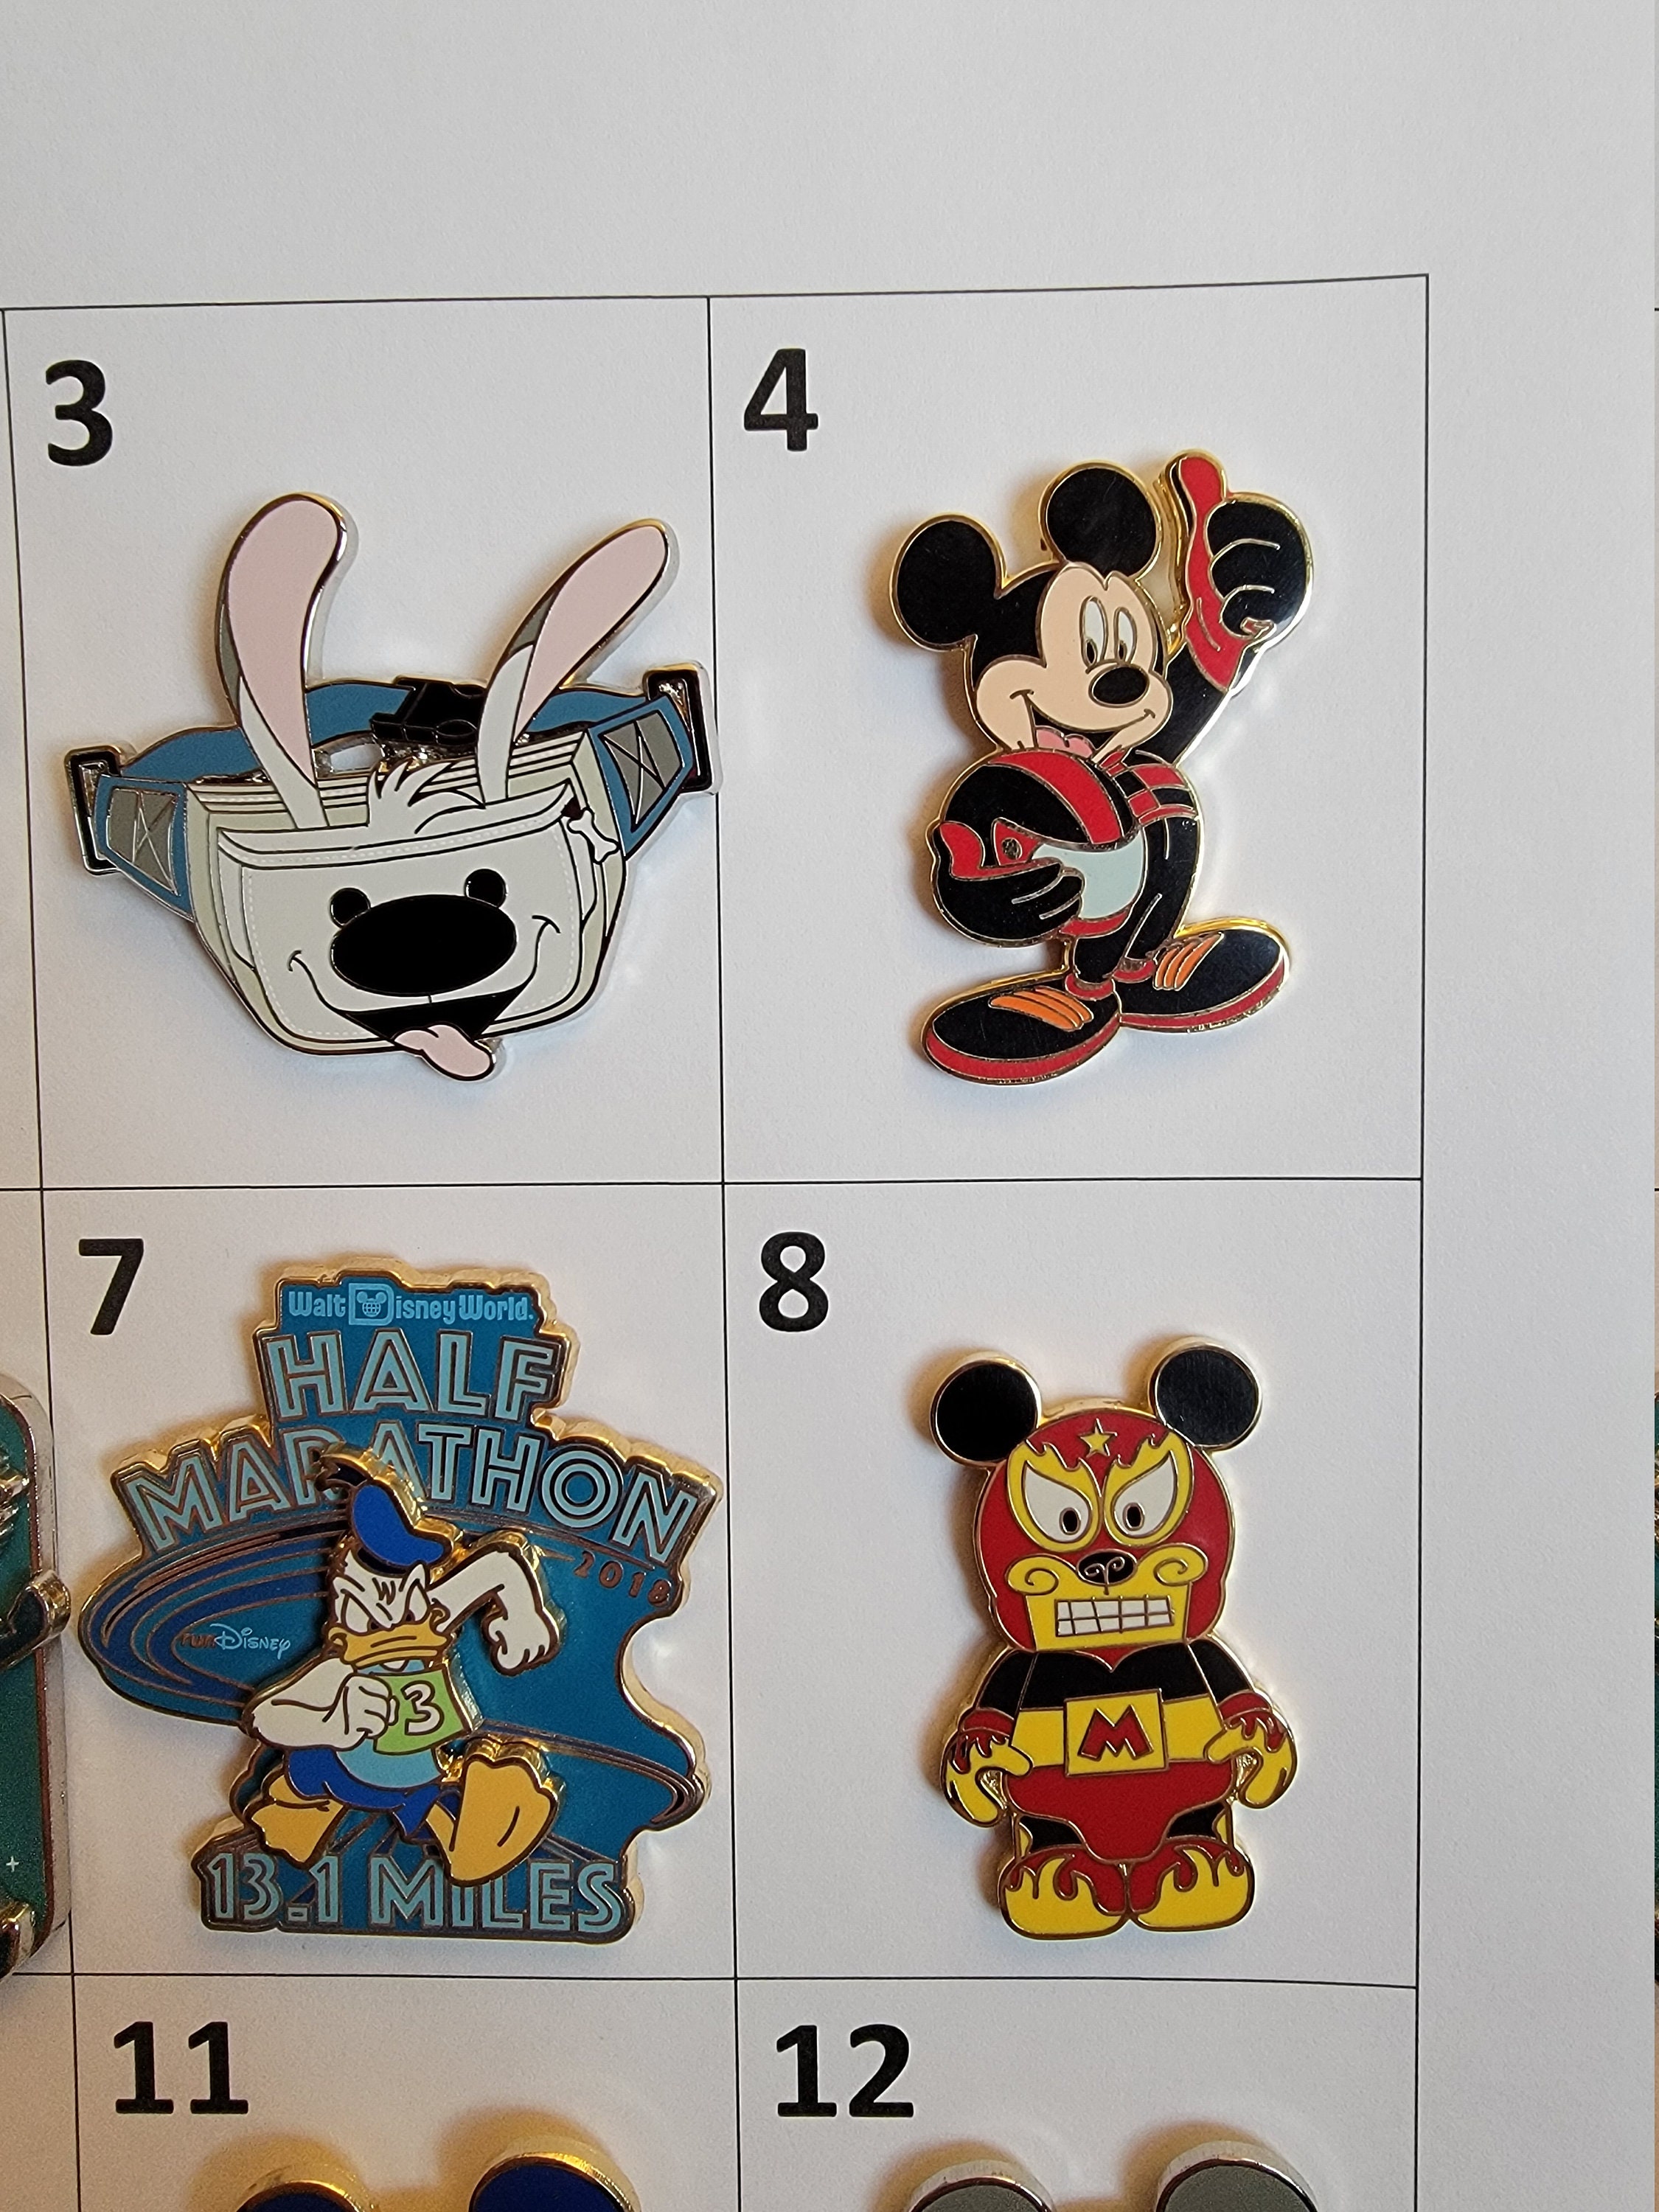 Disney Trading Pin 6822 WDW - Wanna Trade Pin Series (Mickey & Pluto with a Pin  Book)